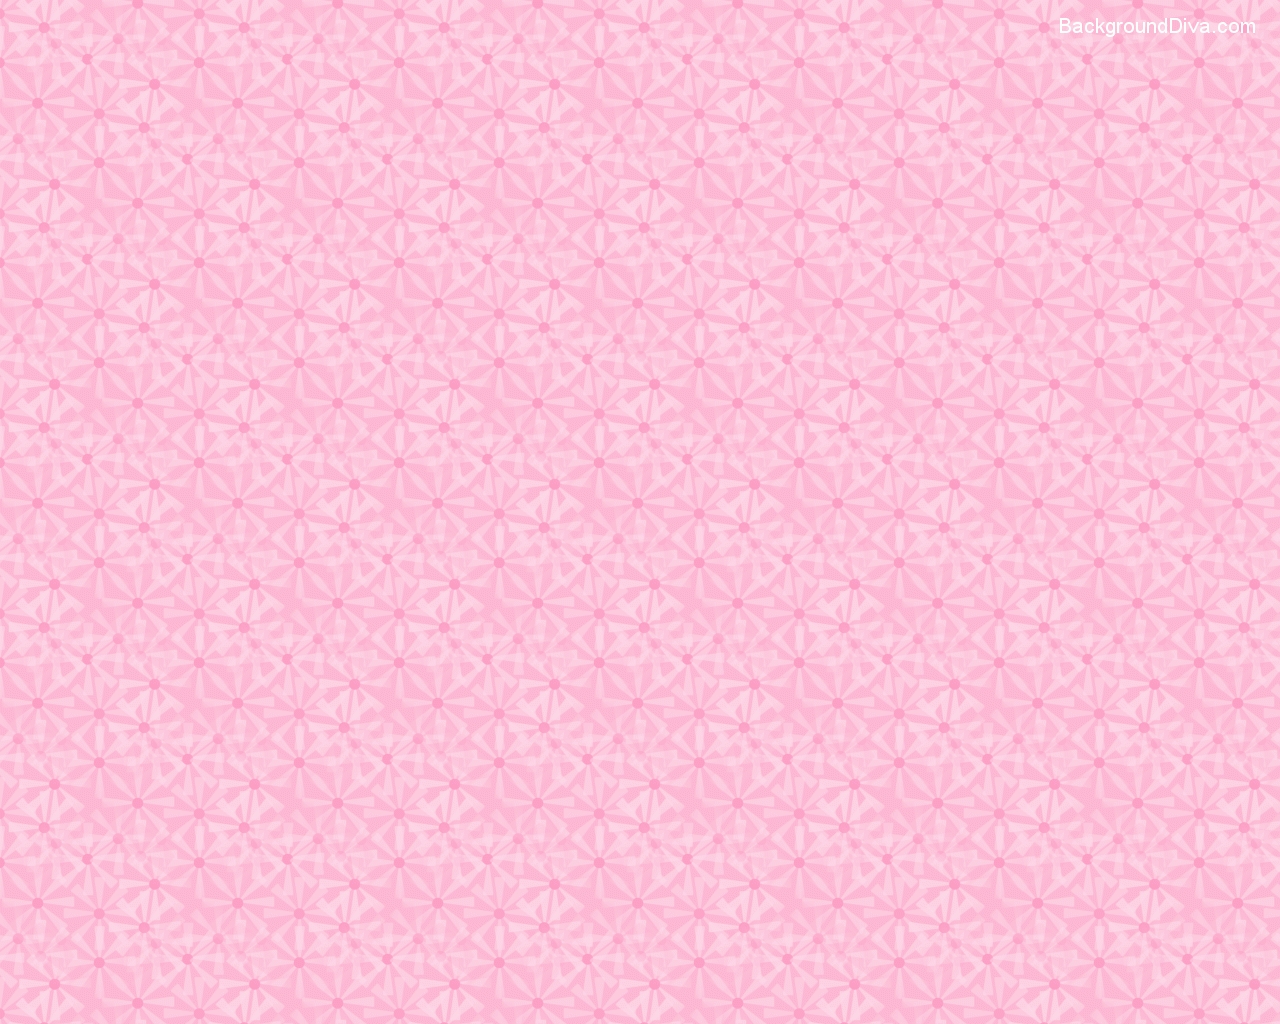 light pink backgrounds - wallpaper cave